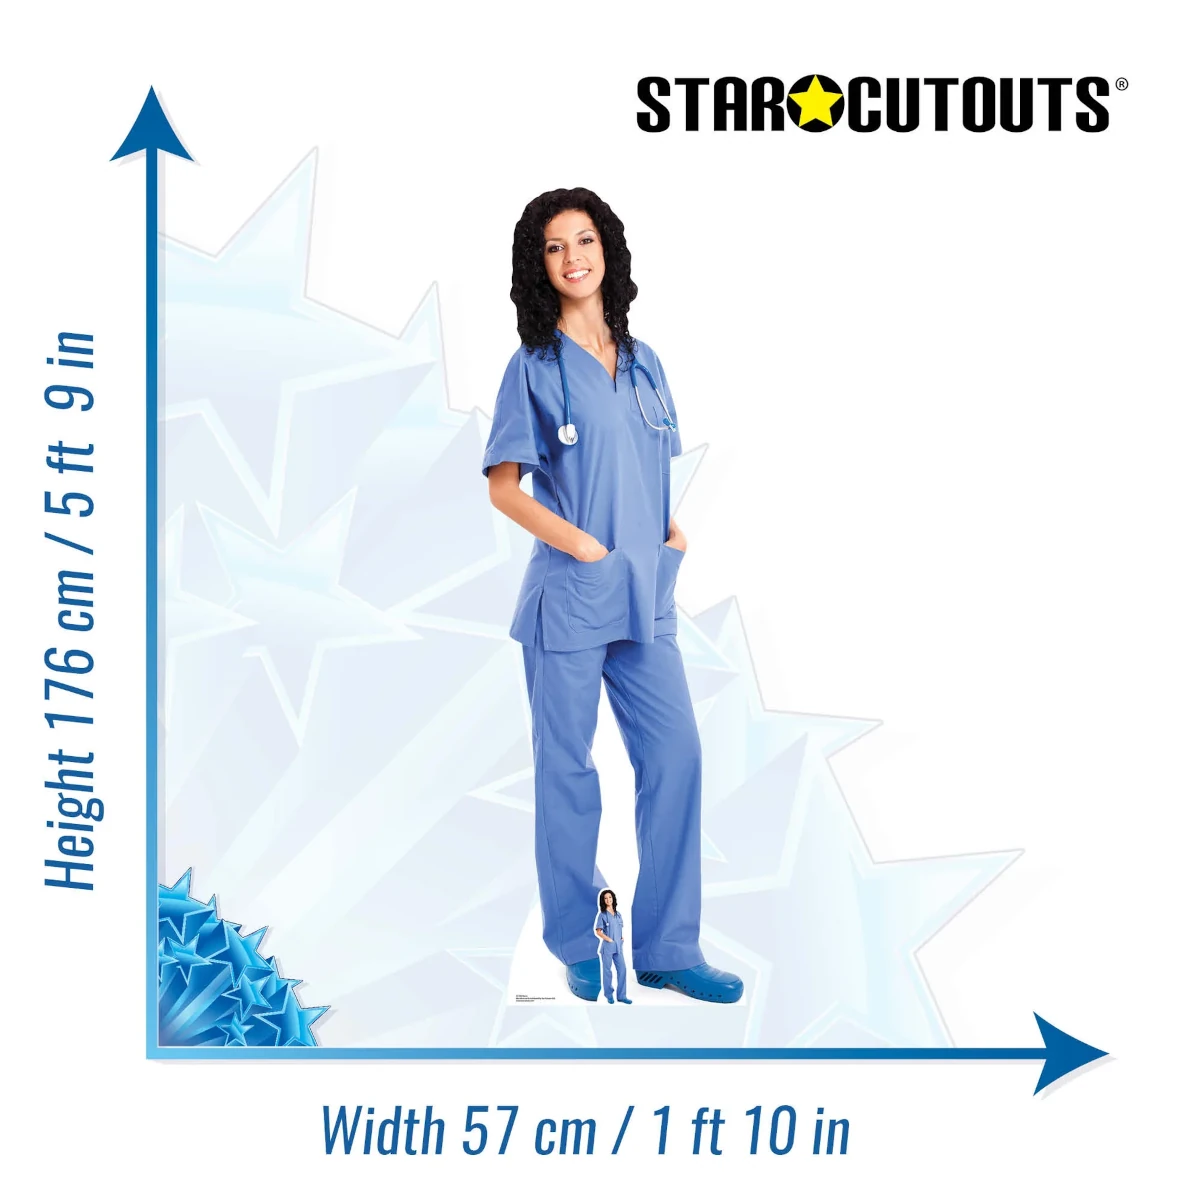 SC1583 Female DoctorNurse Health Worker Lifesize + Mini Cardboard Cutout Standee Size